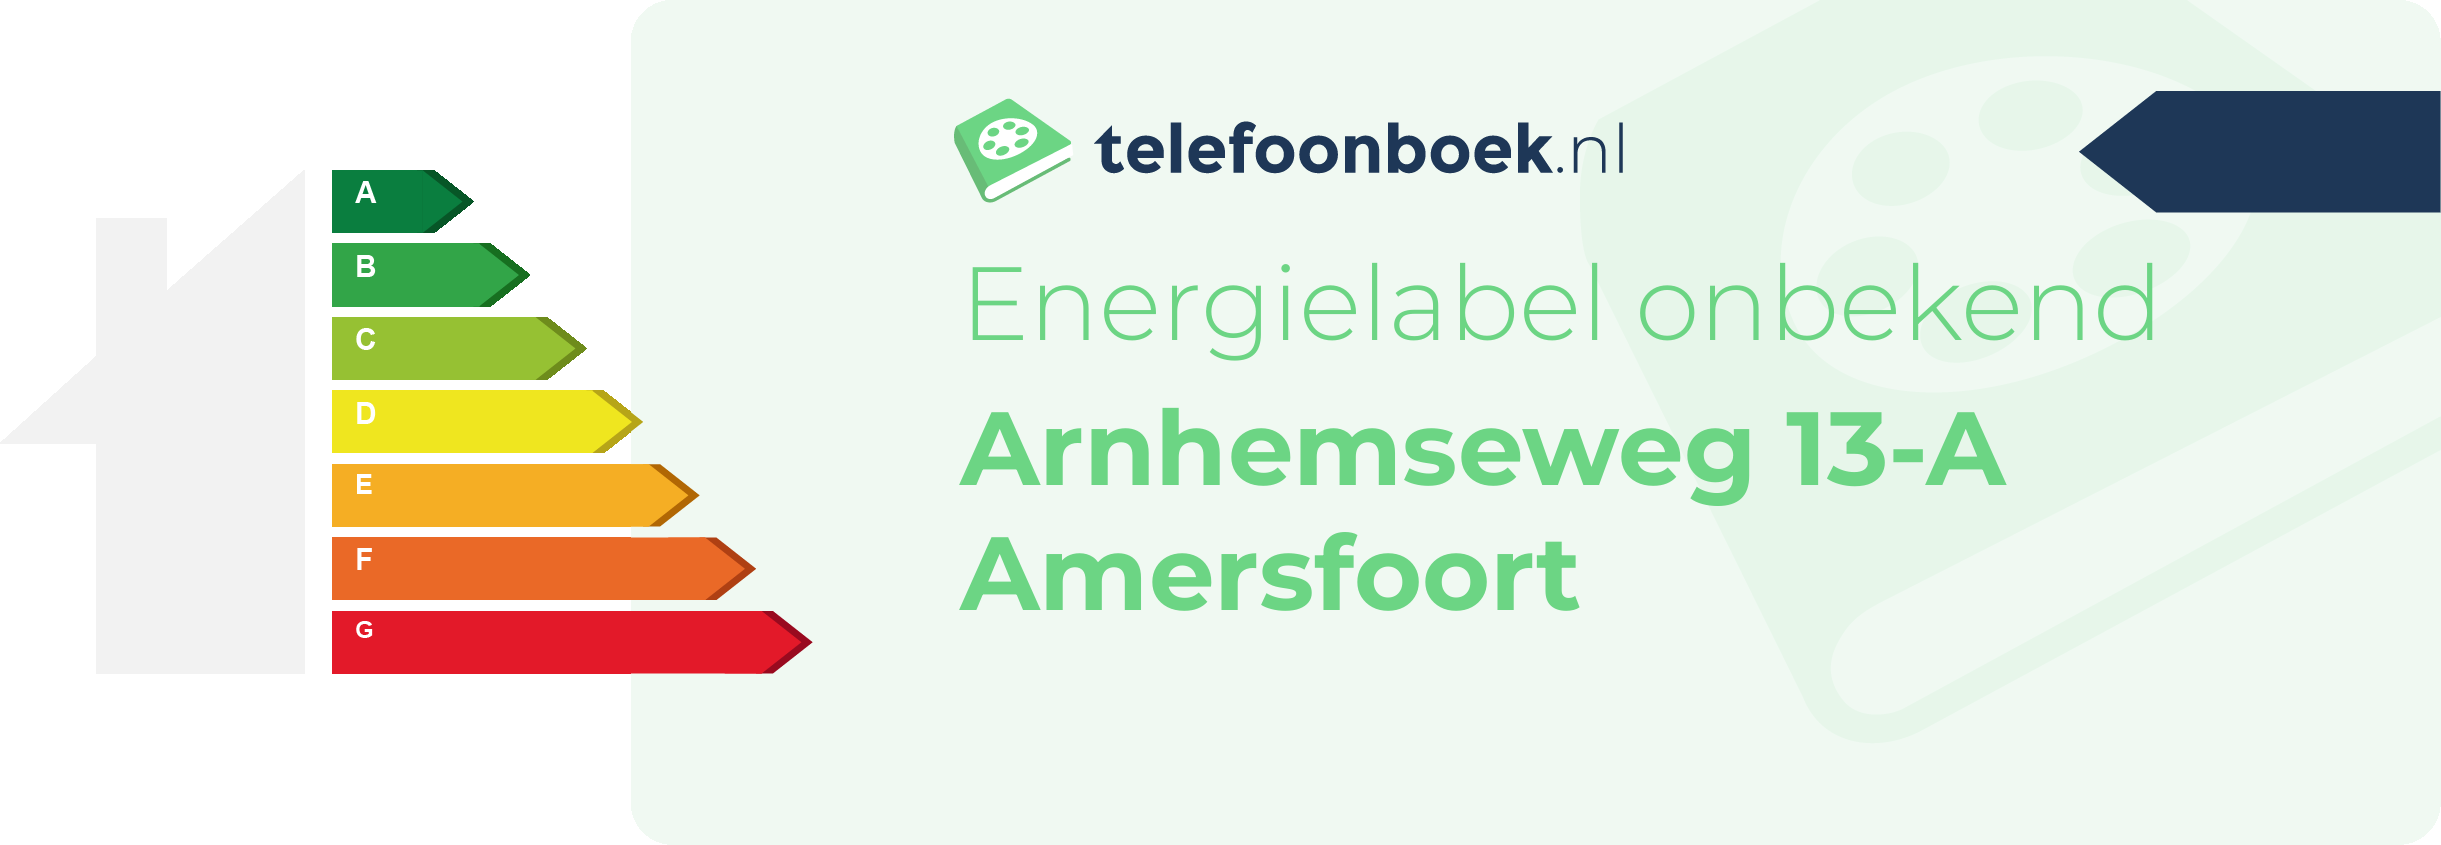 Energielabel Arnhemseweg 13-A Amersfoort